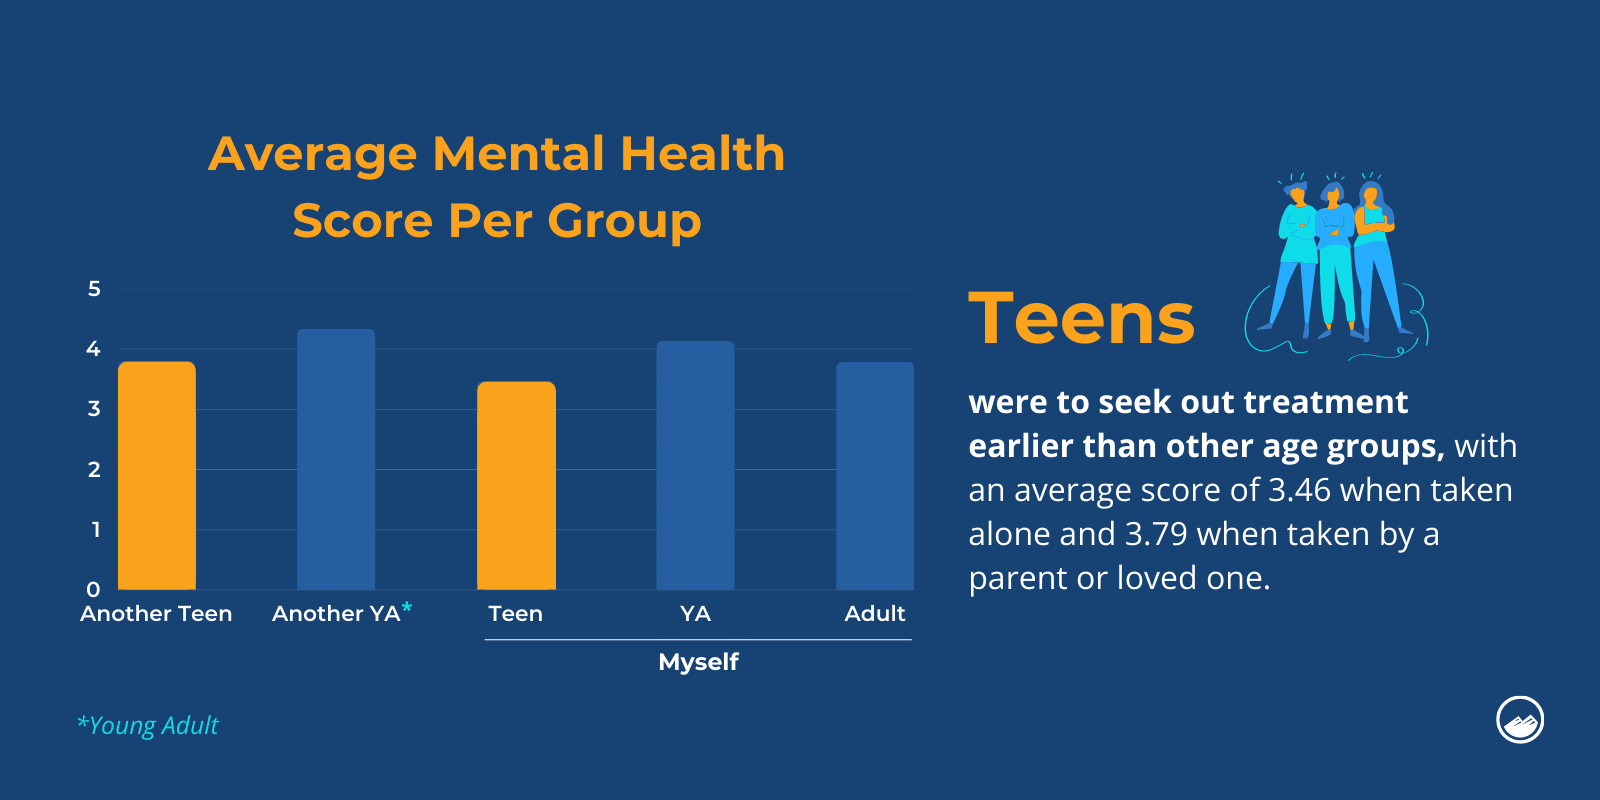 Teens seek mental health guidance sooner than other age groups